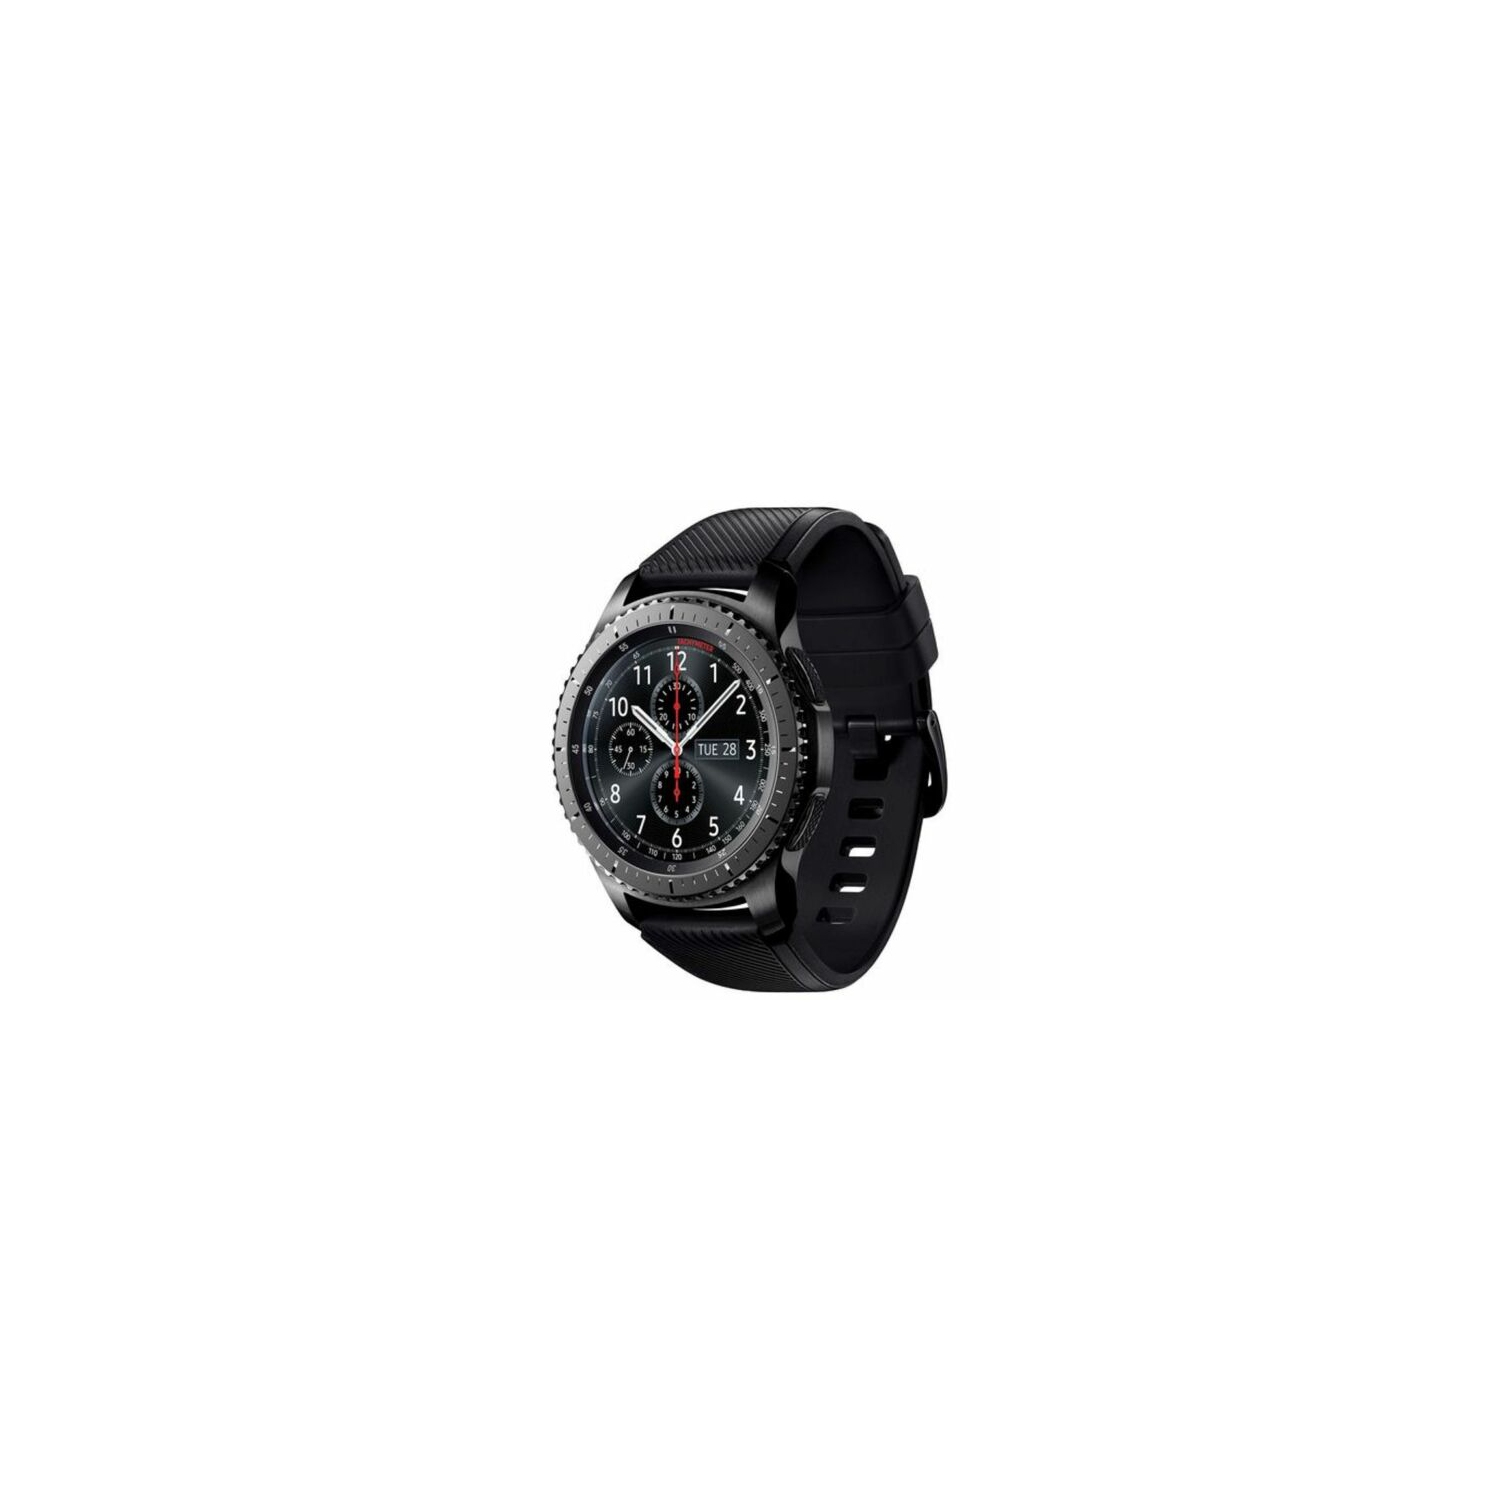 Refurbished (Excellent) - Samsung Gear S3 Frontier Smartwatch, Black